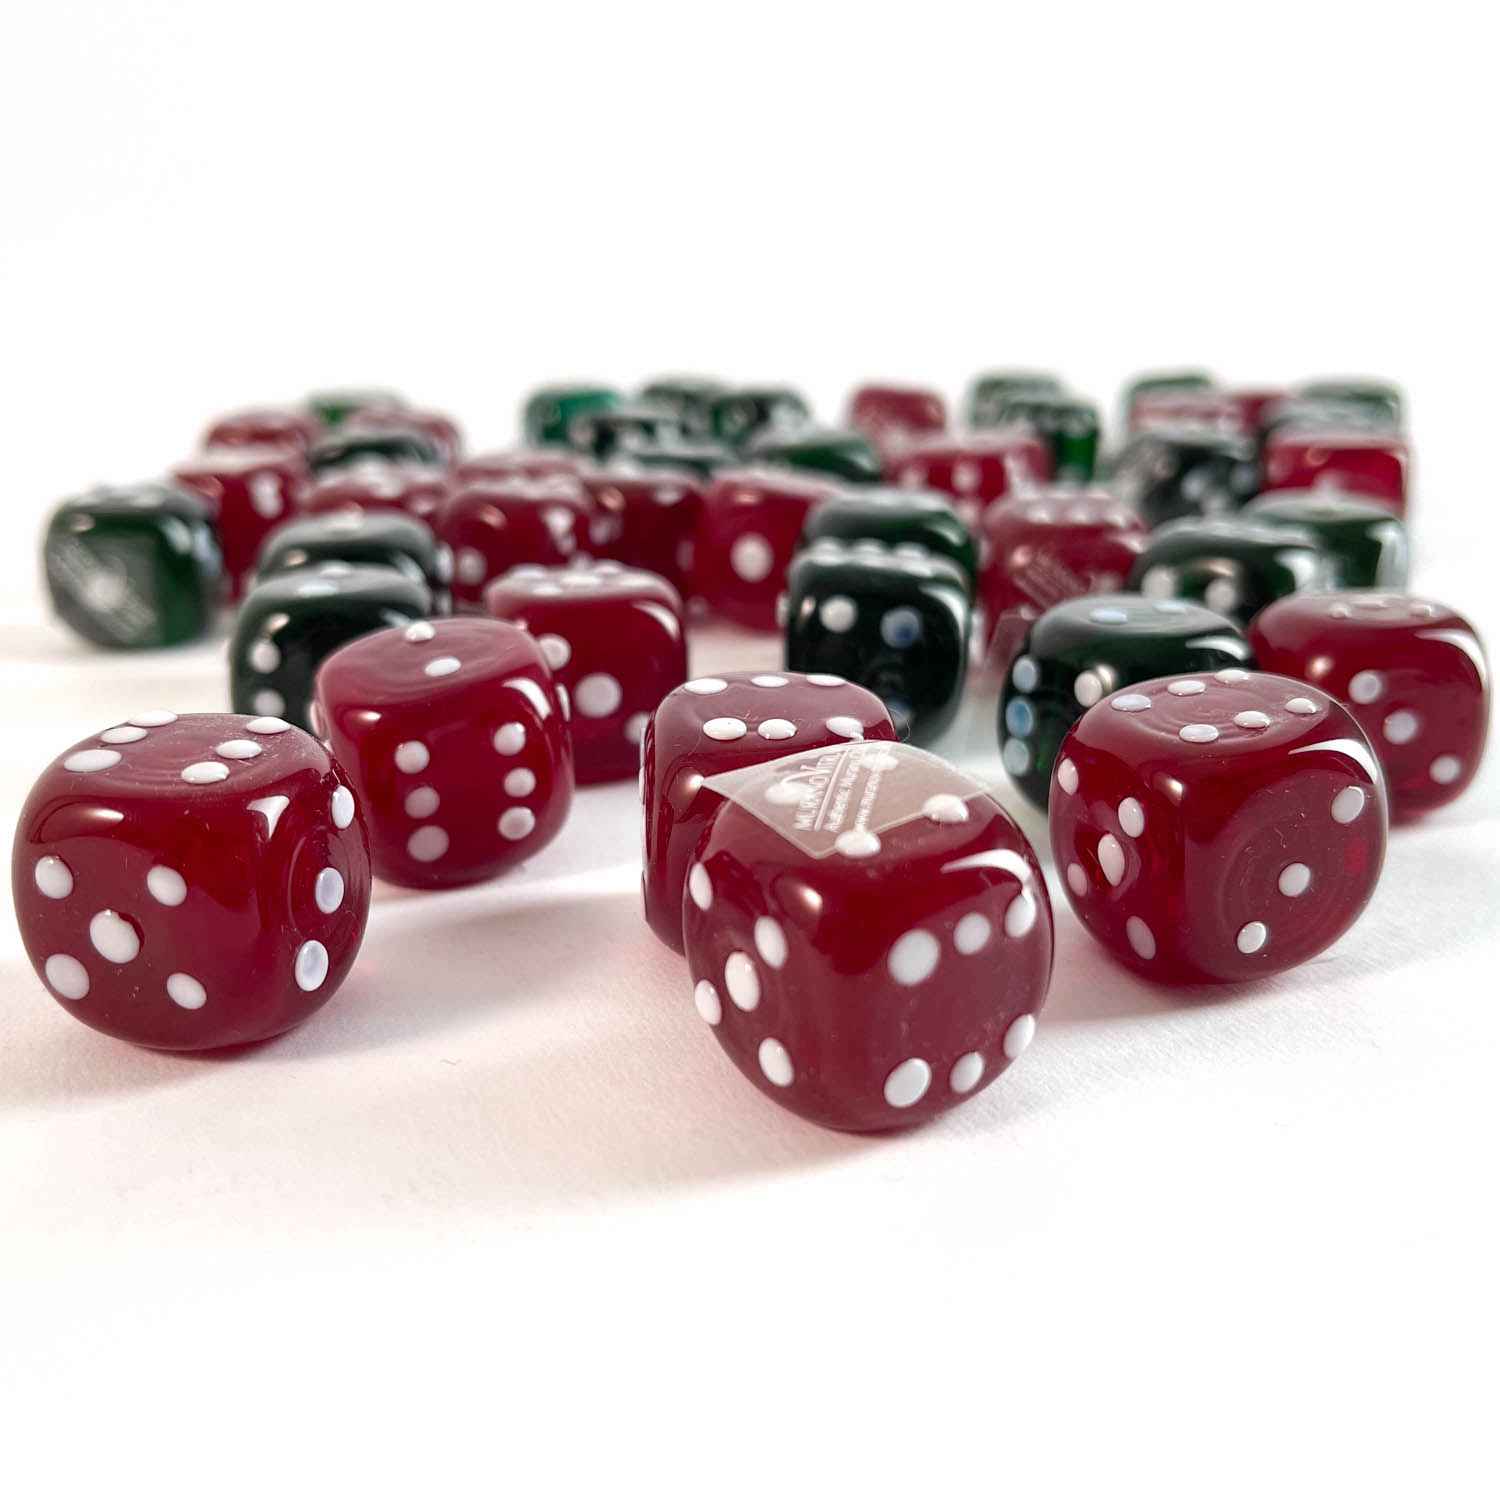 murano glass casino dice made of venetian glass hand made made in italy